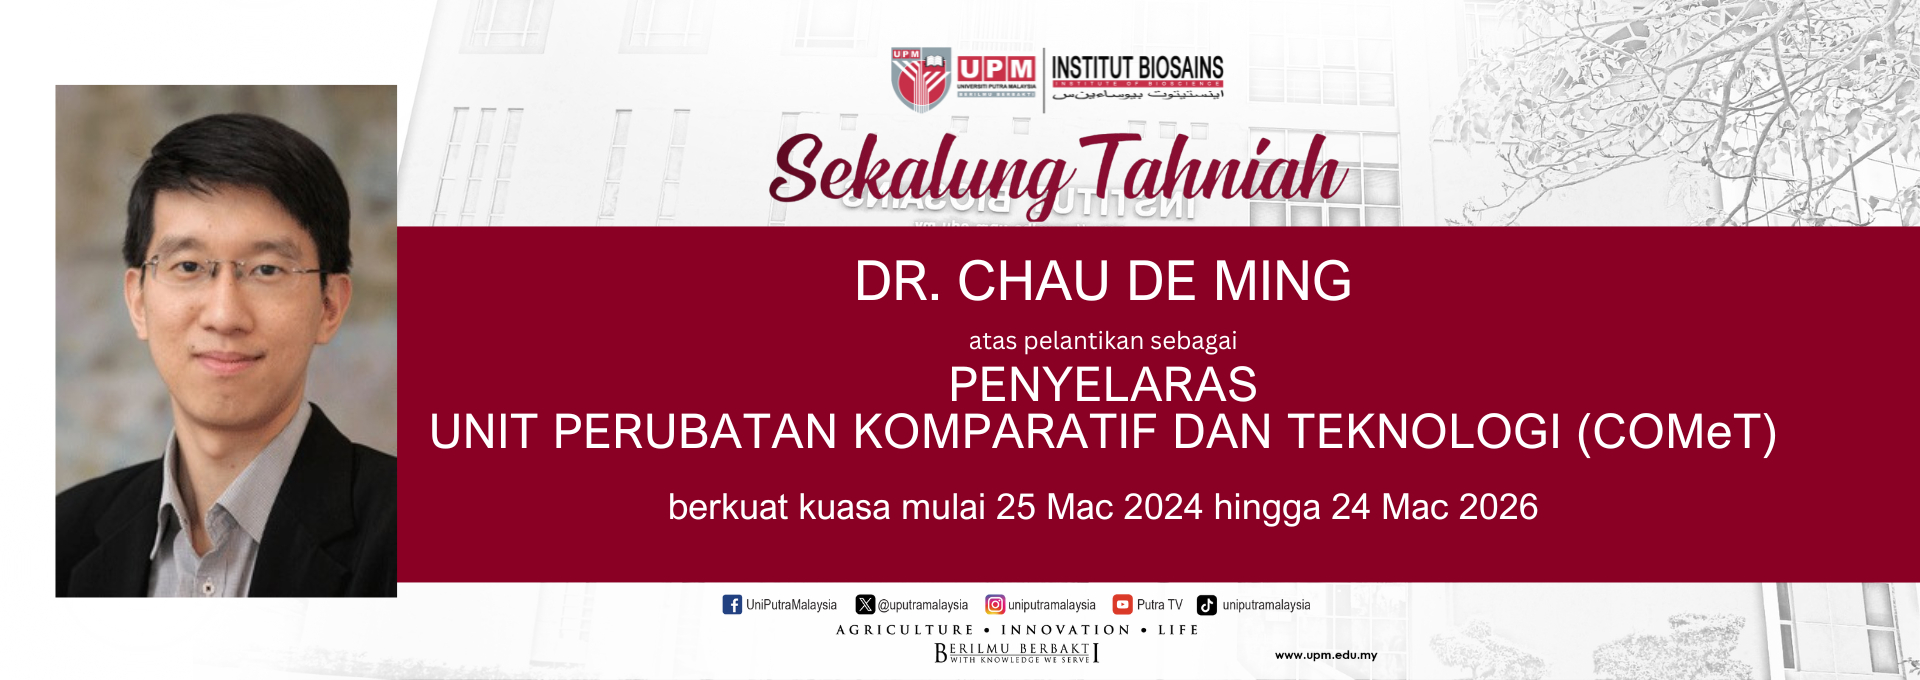 Selamat Datang Dr. Chau De Ming